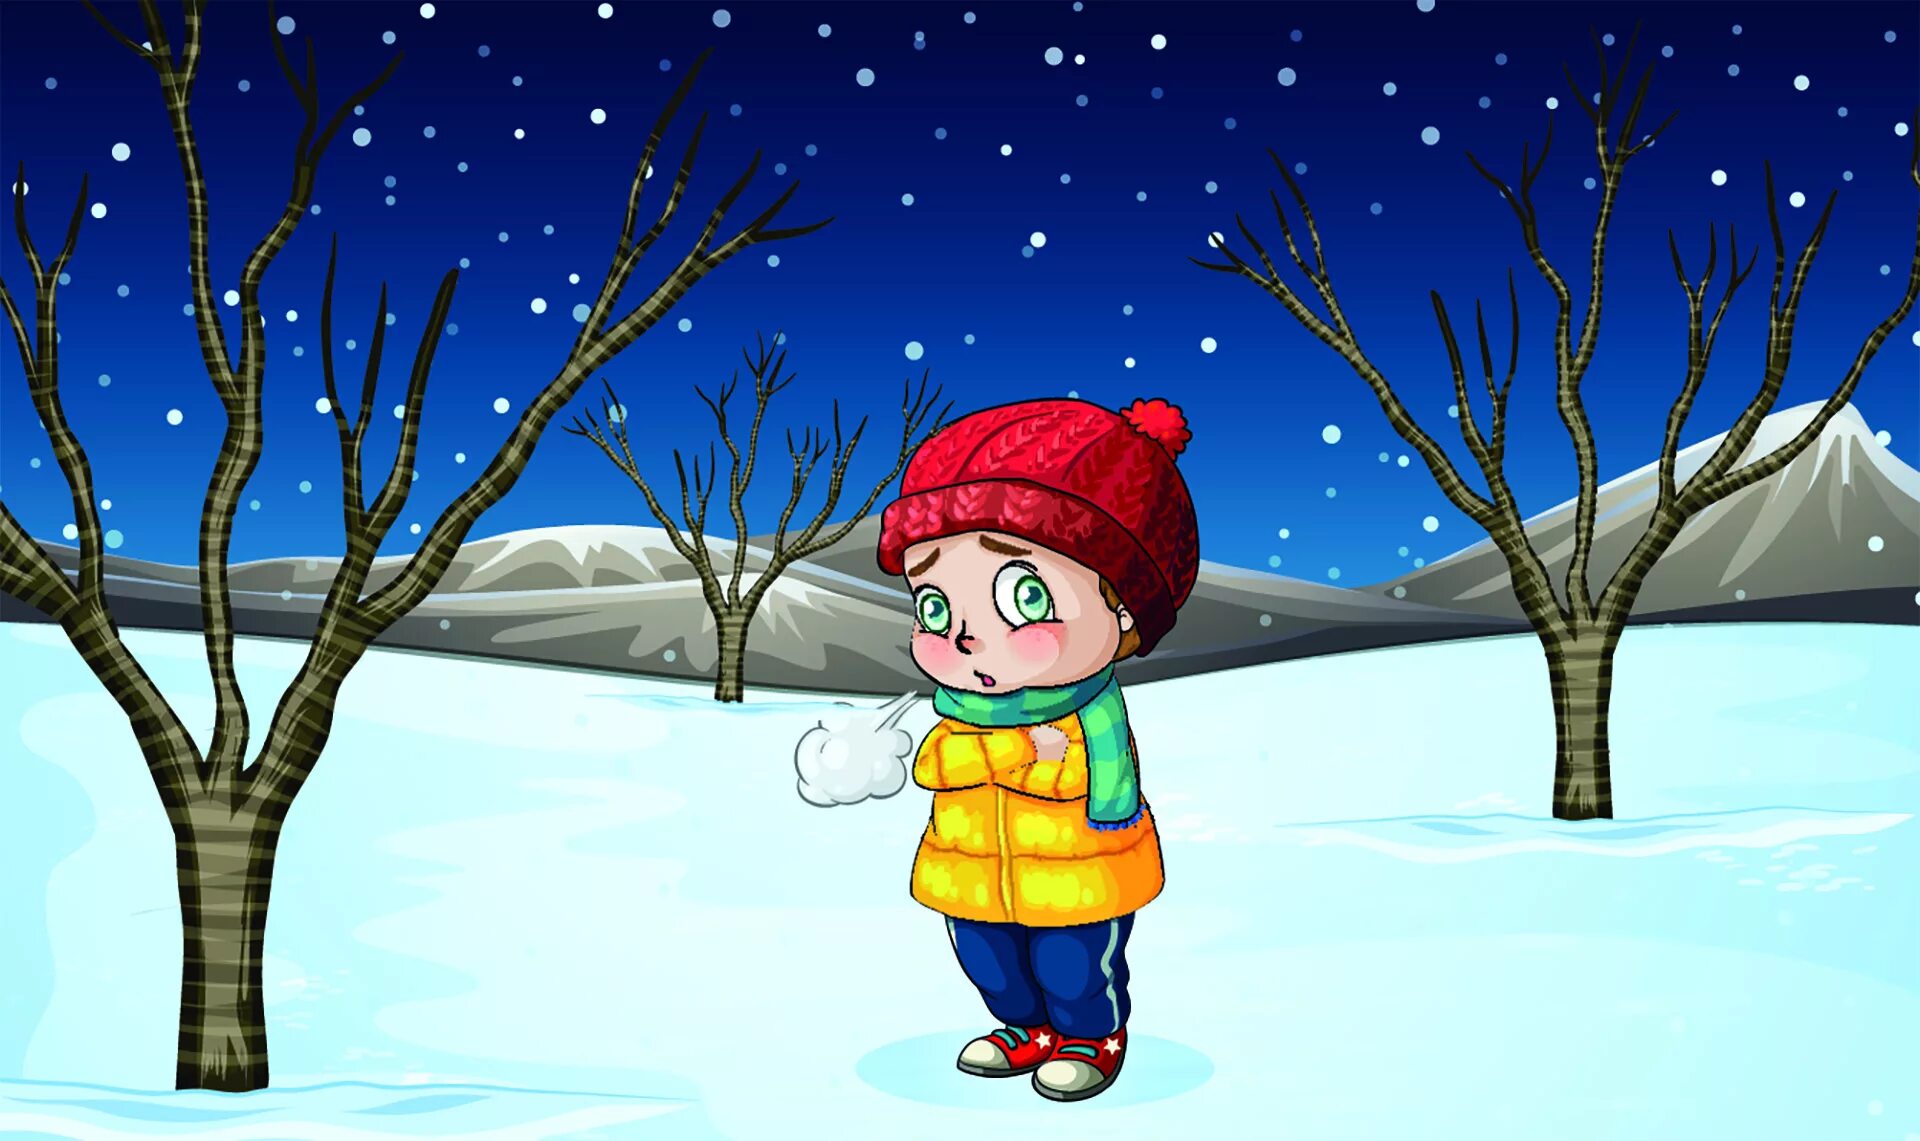 Cold weather для детей. Холод на улице картинка для детей. Chilly weather рисунок. Картинки Cold weather for Kids.